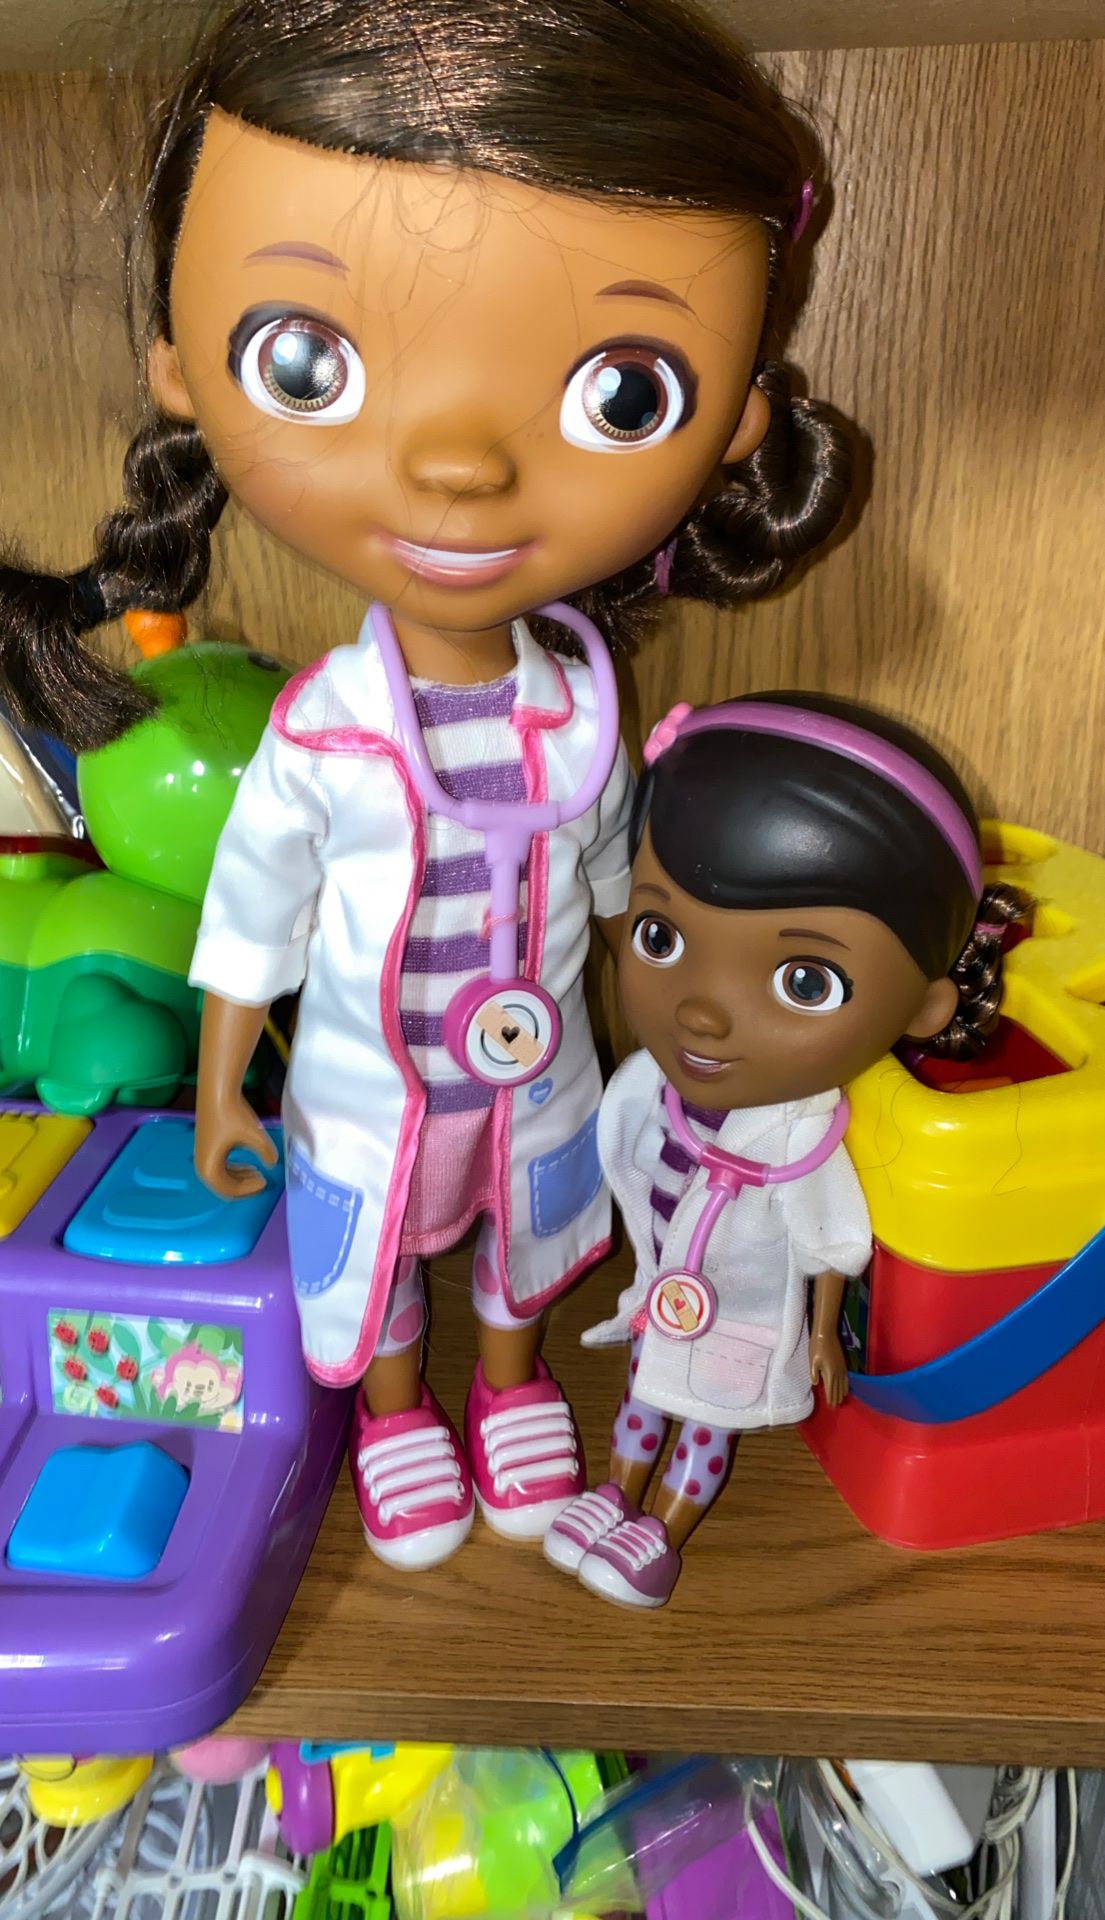 Doctor dolls